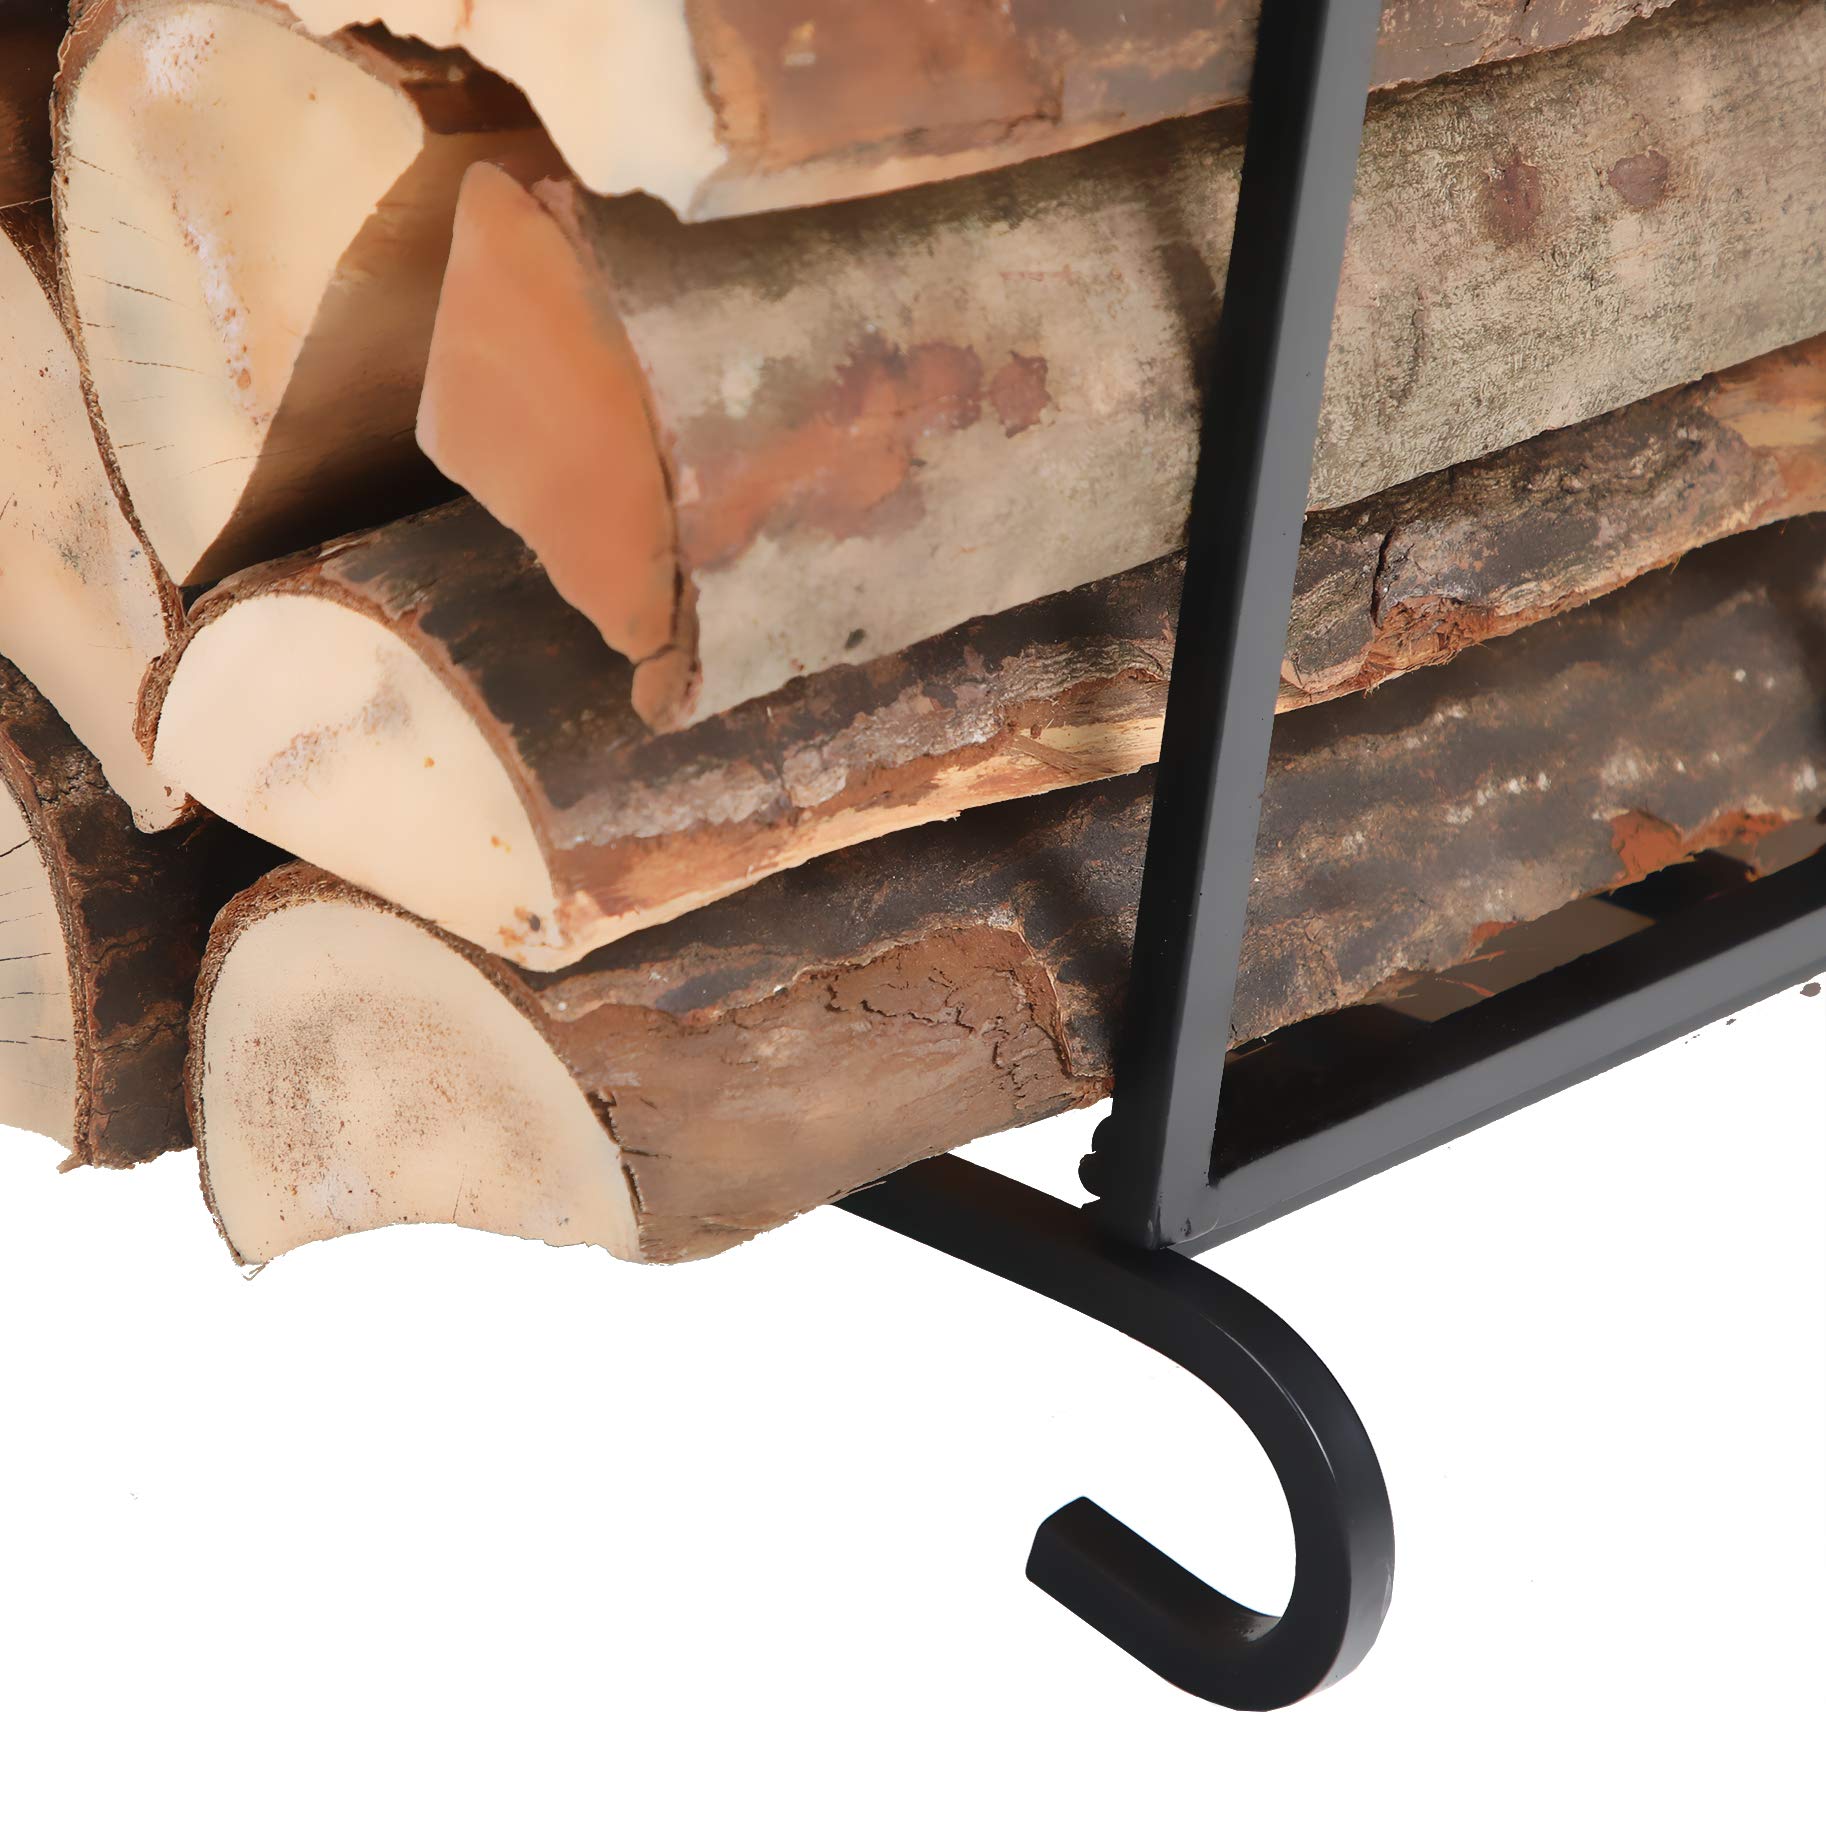 MF Studio 17 Inch Foldable Firewood Log Rack Decorative Indoor/Outdoor Steel Wood Storage Log Rack Holder, Black - image 5 of 6